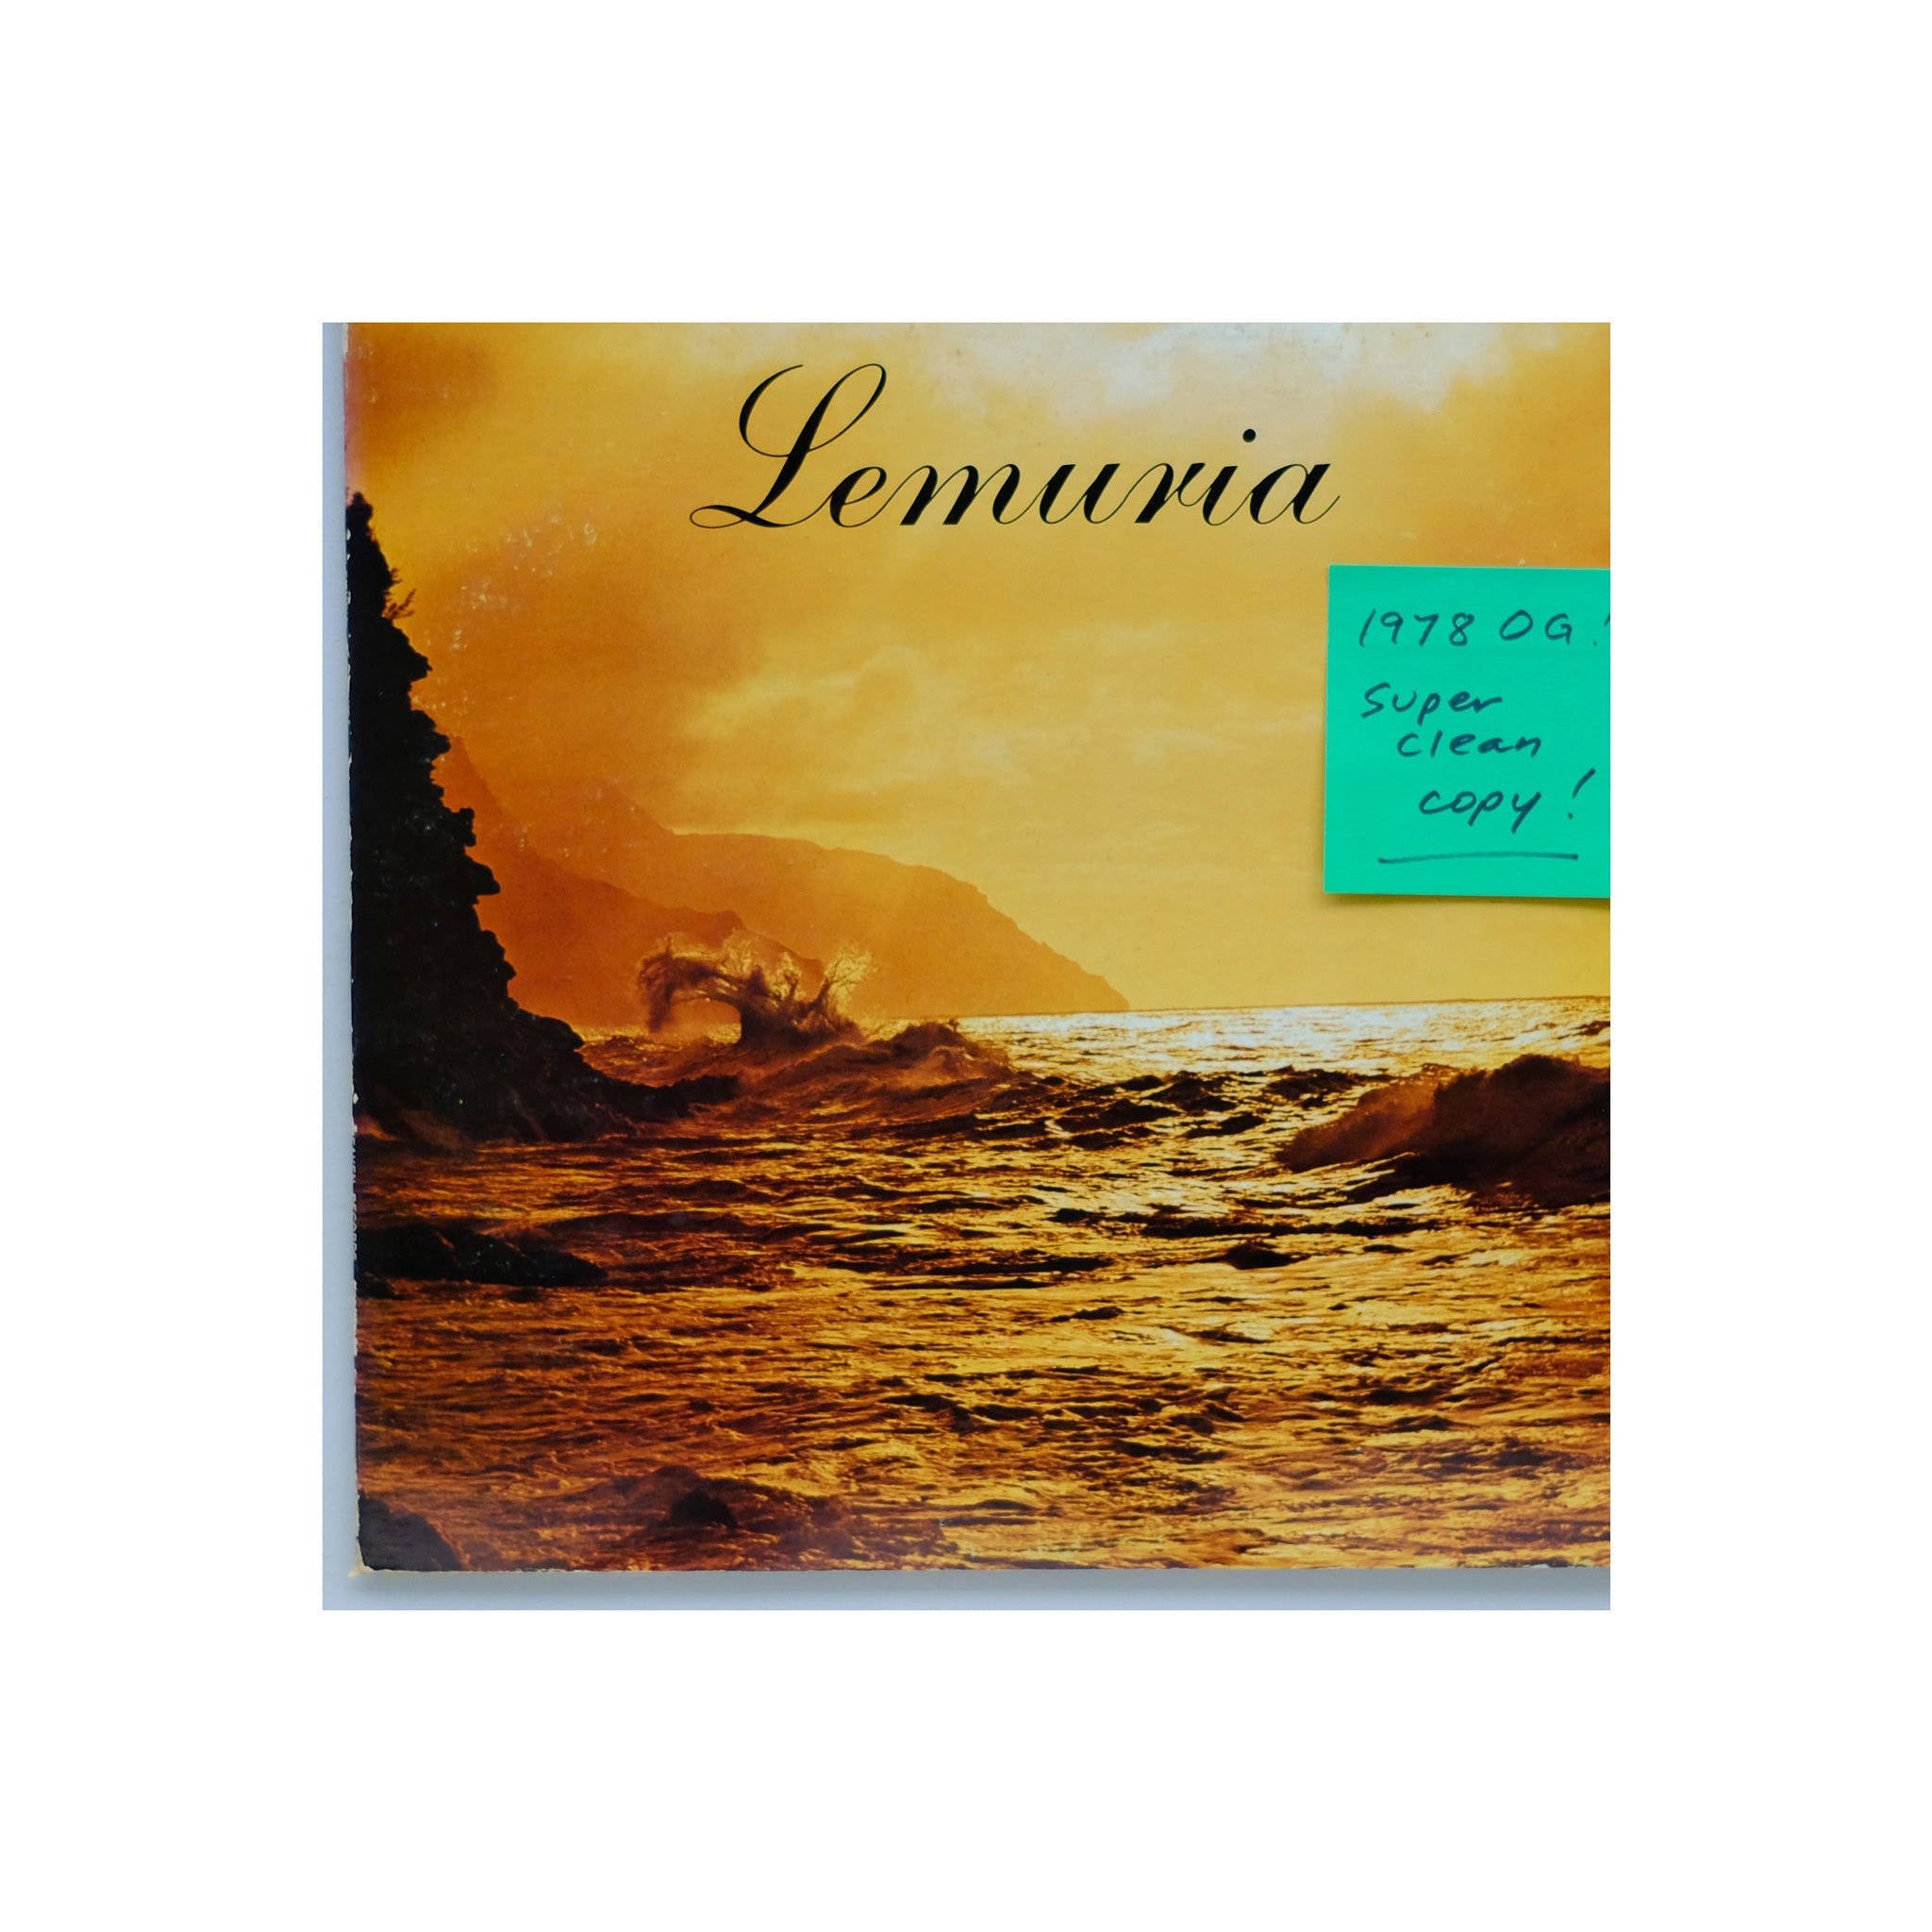 Lemuria - Lemuria [1978 OG]